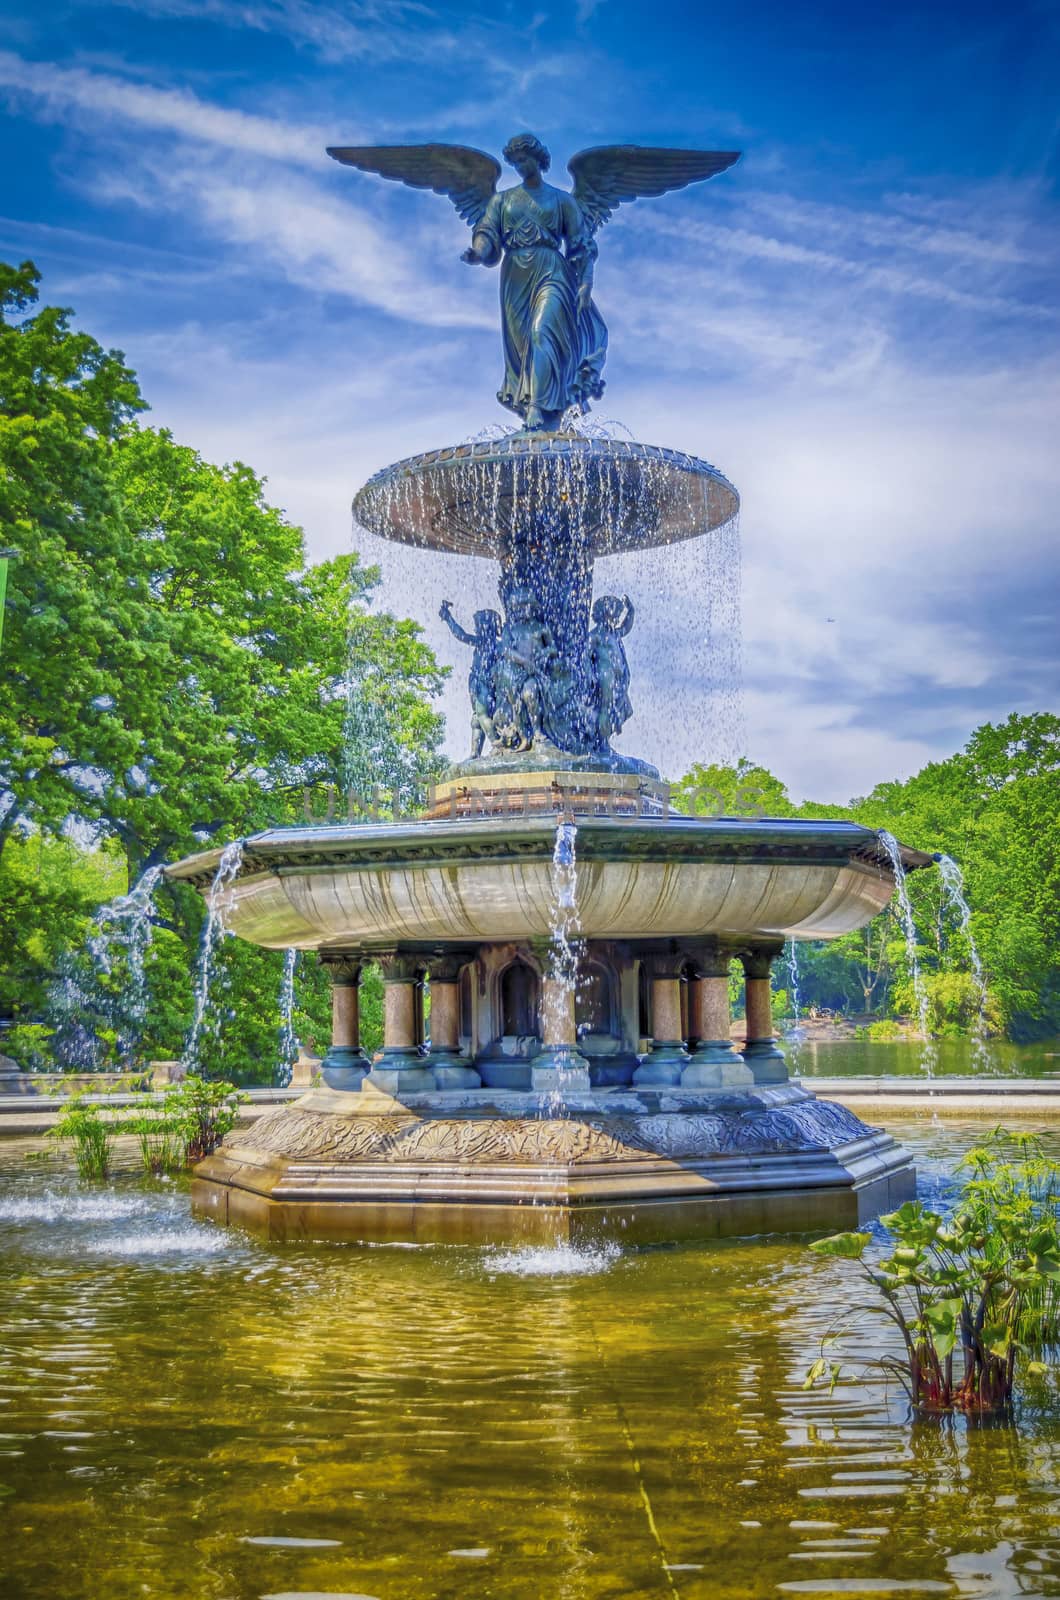 Bethesda Fountain in Central Park, New York by marcorubino